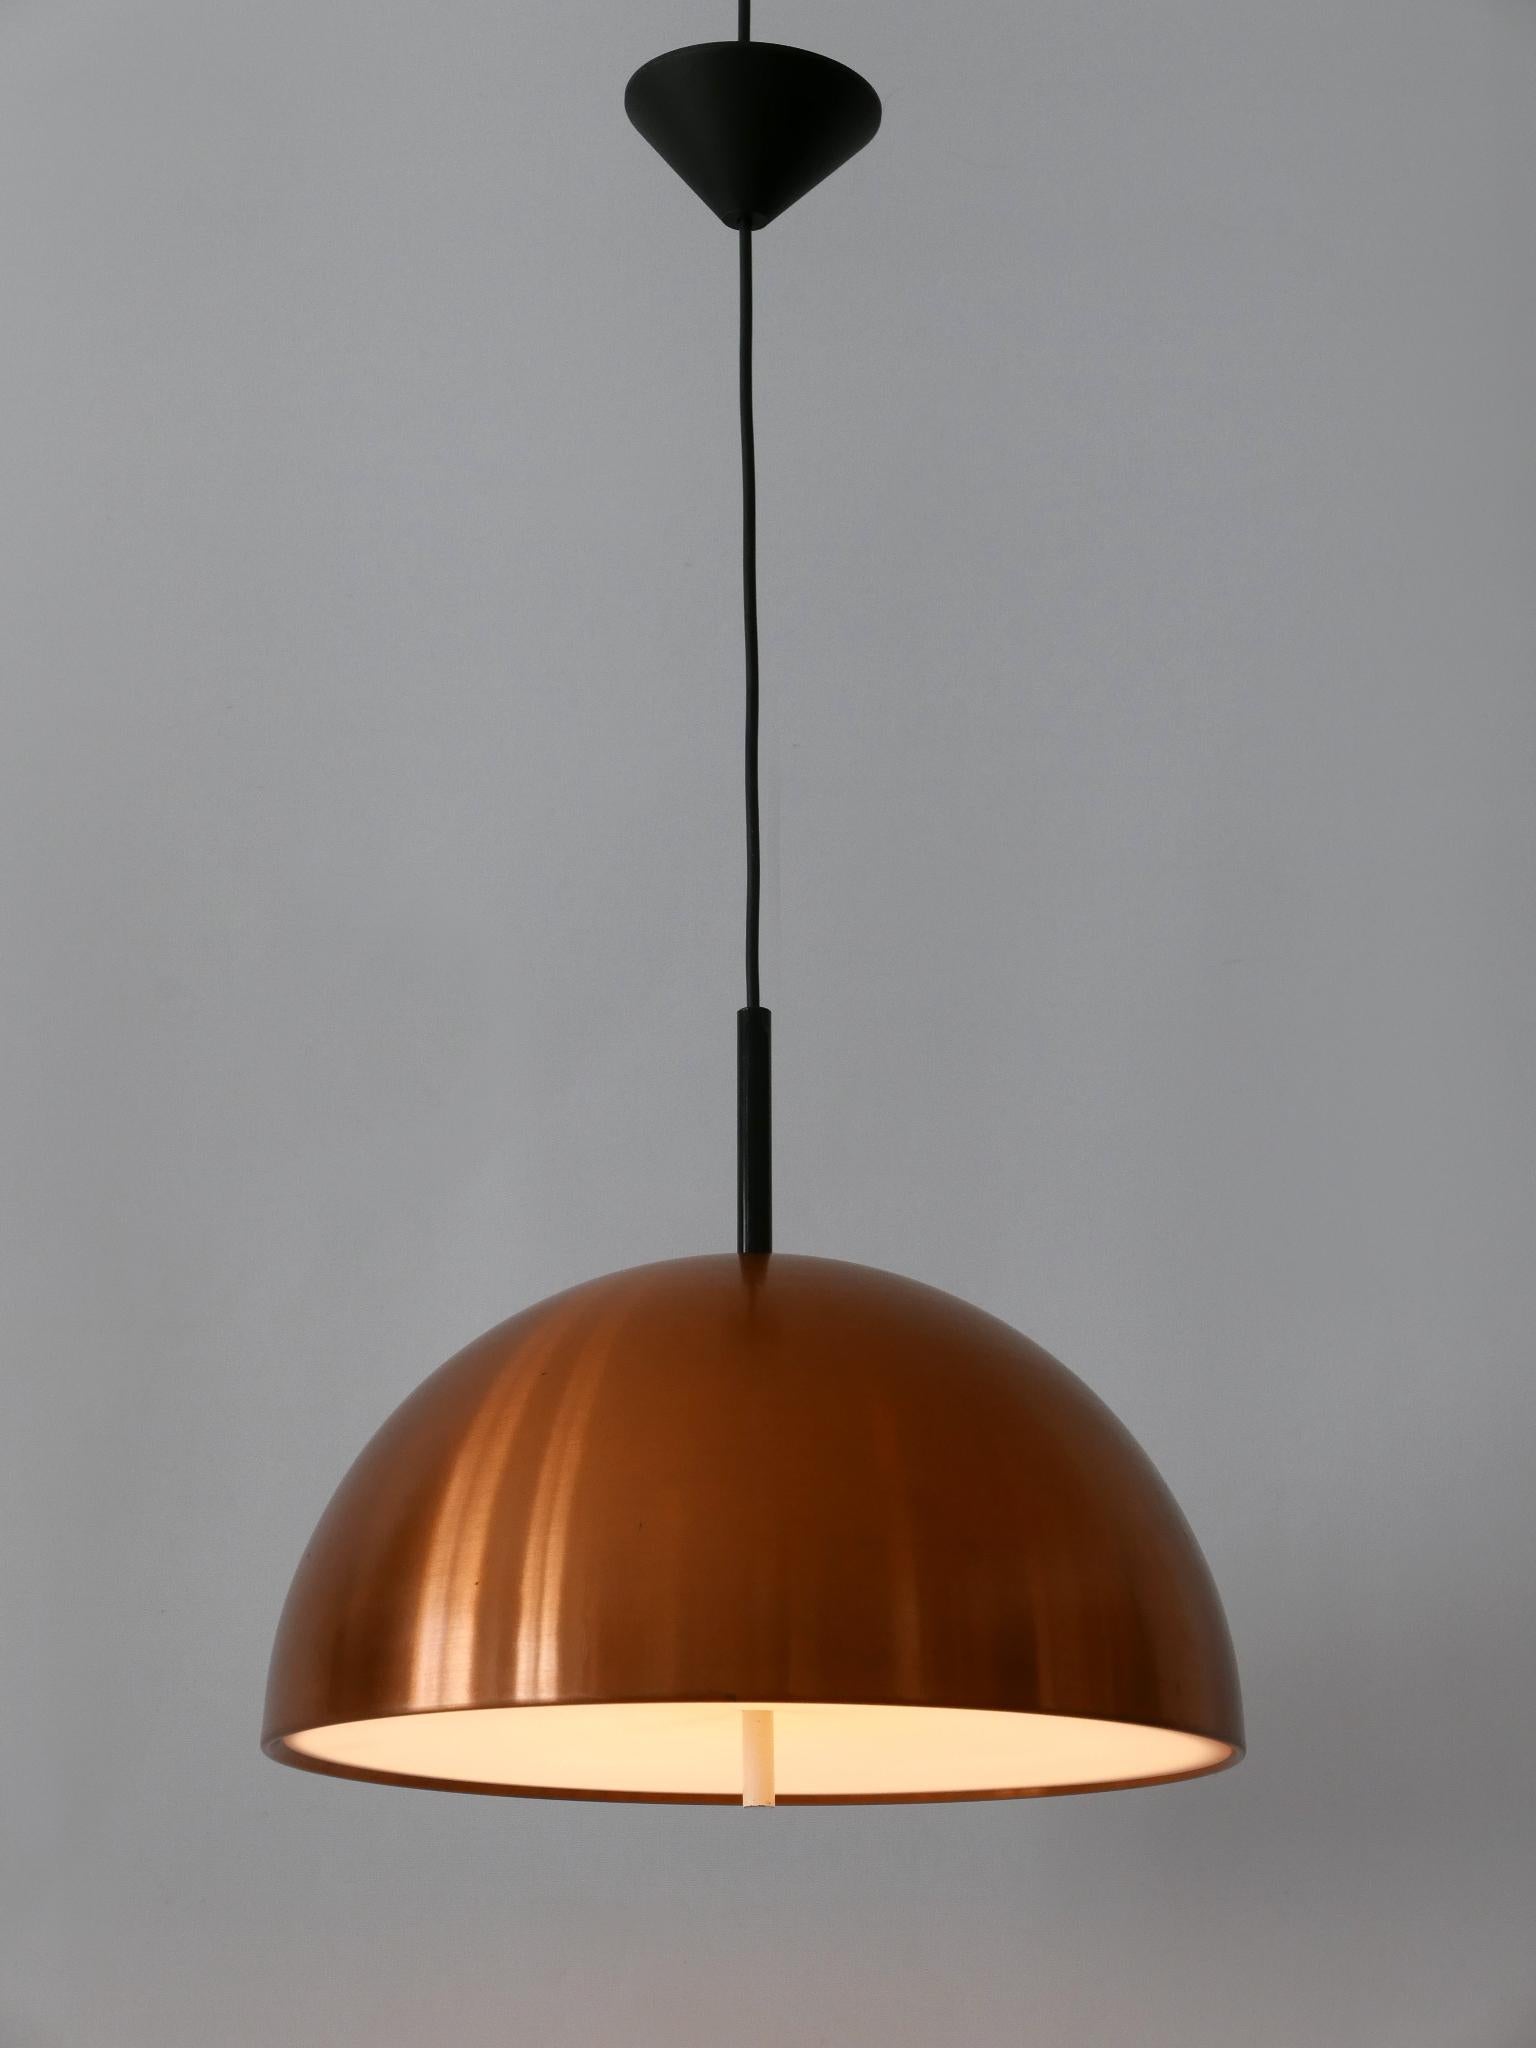 Elegant Mid-Century Modern Copper Pendant Lamp by Staff & Schwarz Germany 1960s For Sale 4